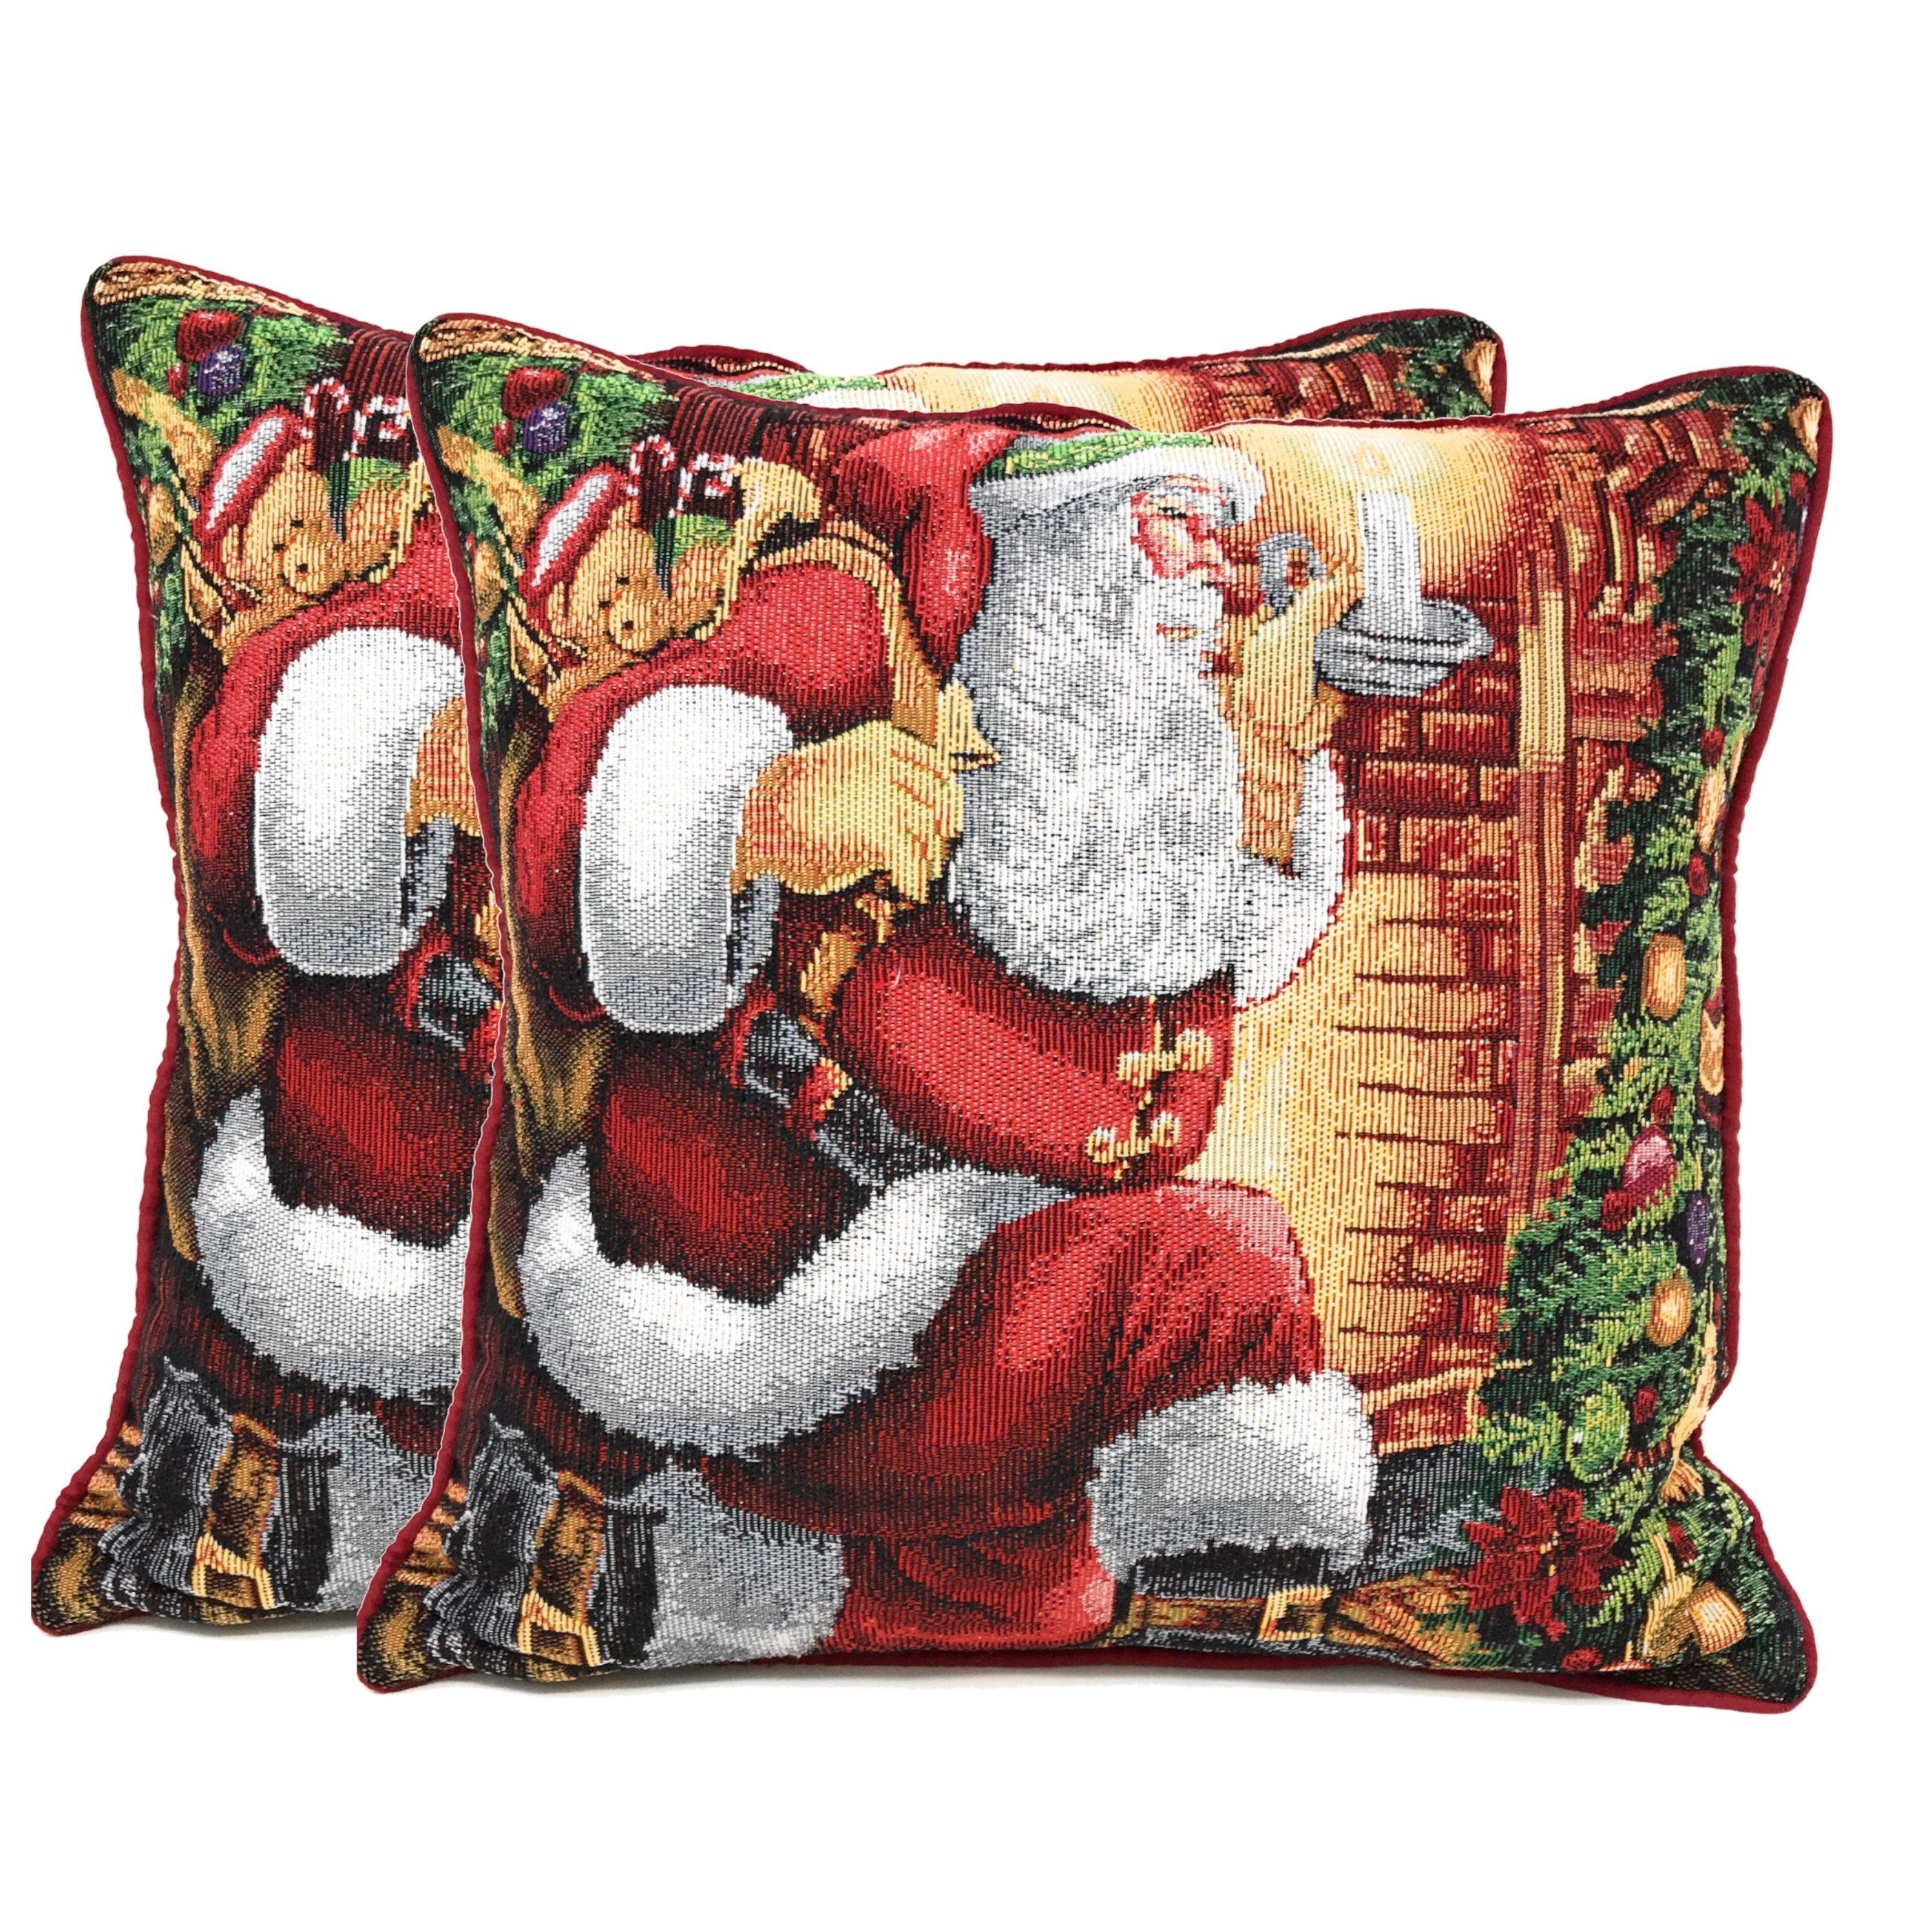 Tache Festive Santa Down the Chimney Tapestry Throw Pillow Cover (DB11533CC) - Tache Home Fashion